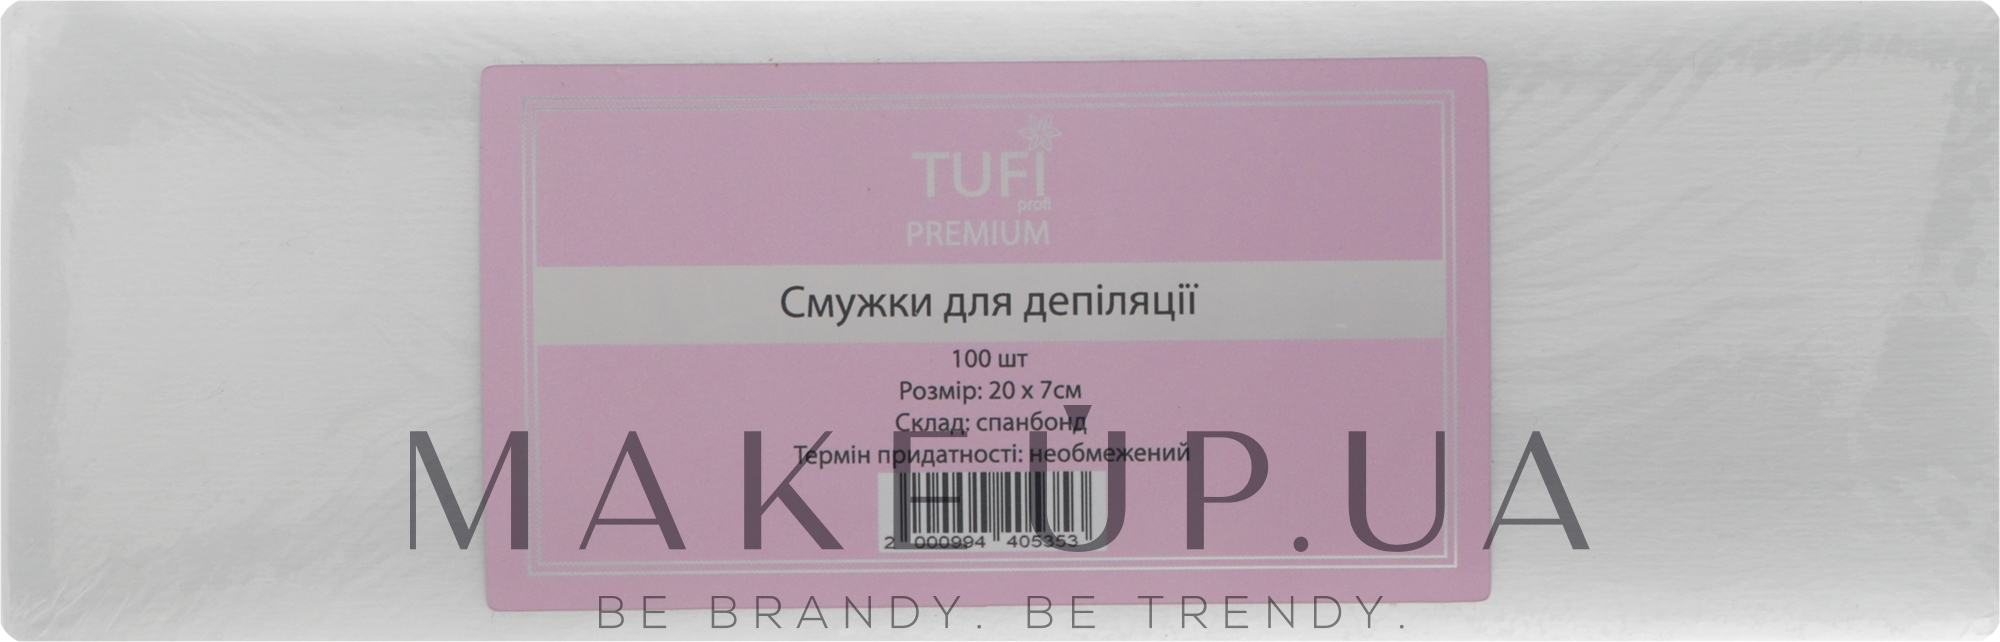 Полоски для депиляции, 100 шт - Tufi Profi Premium  — фото 100шт